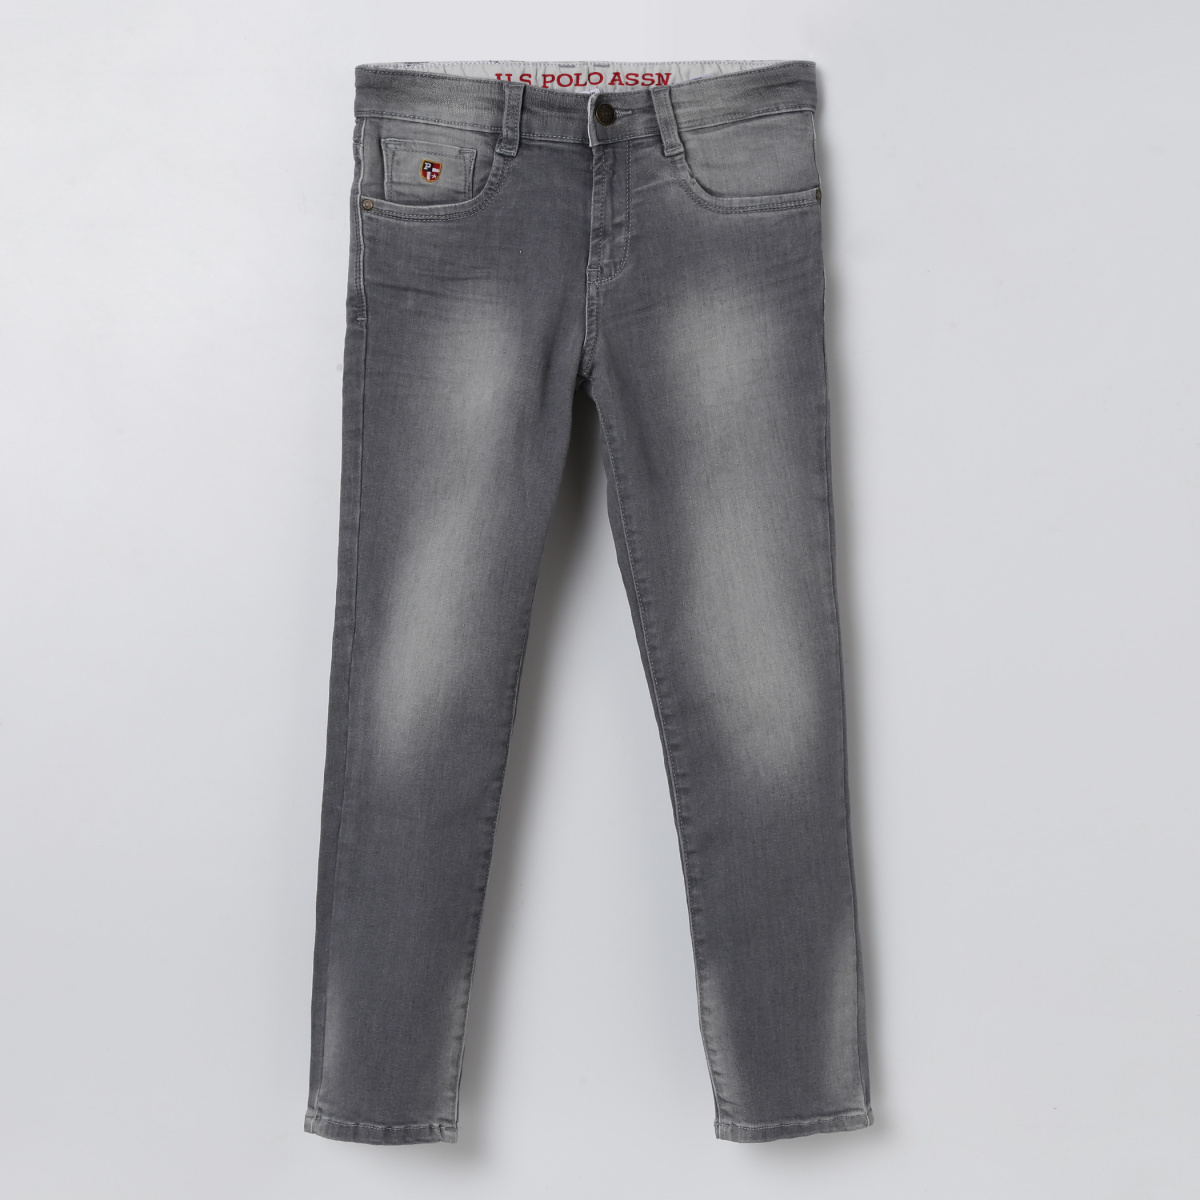 U.S. POLO ASSN. KIDS Stonewashed Slim Fit Jeans